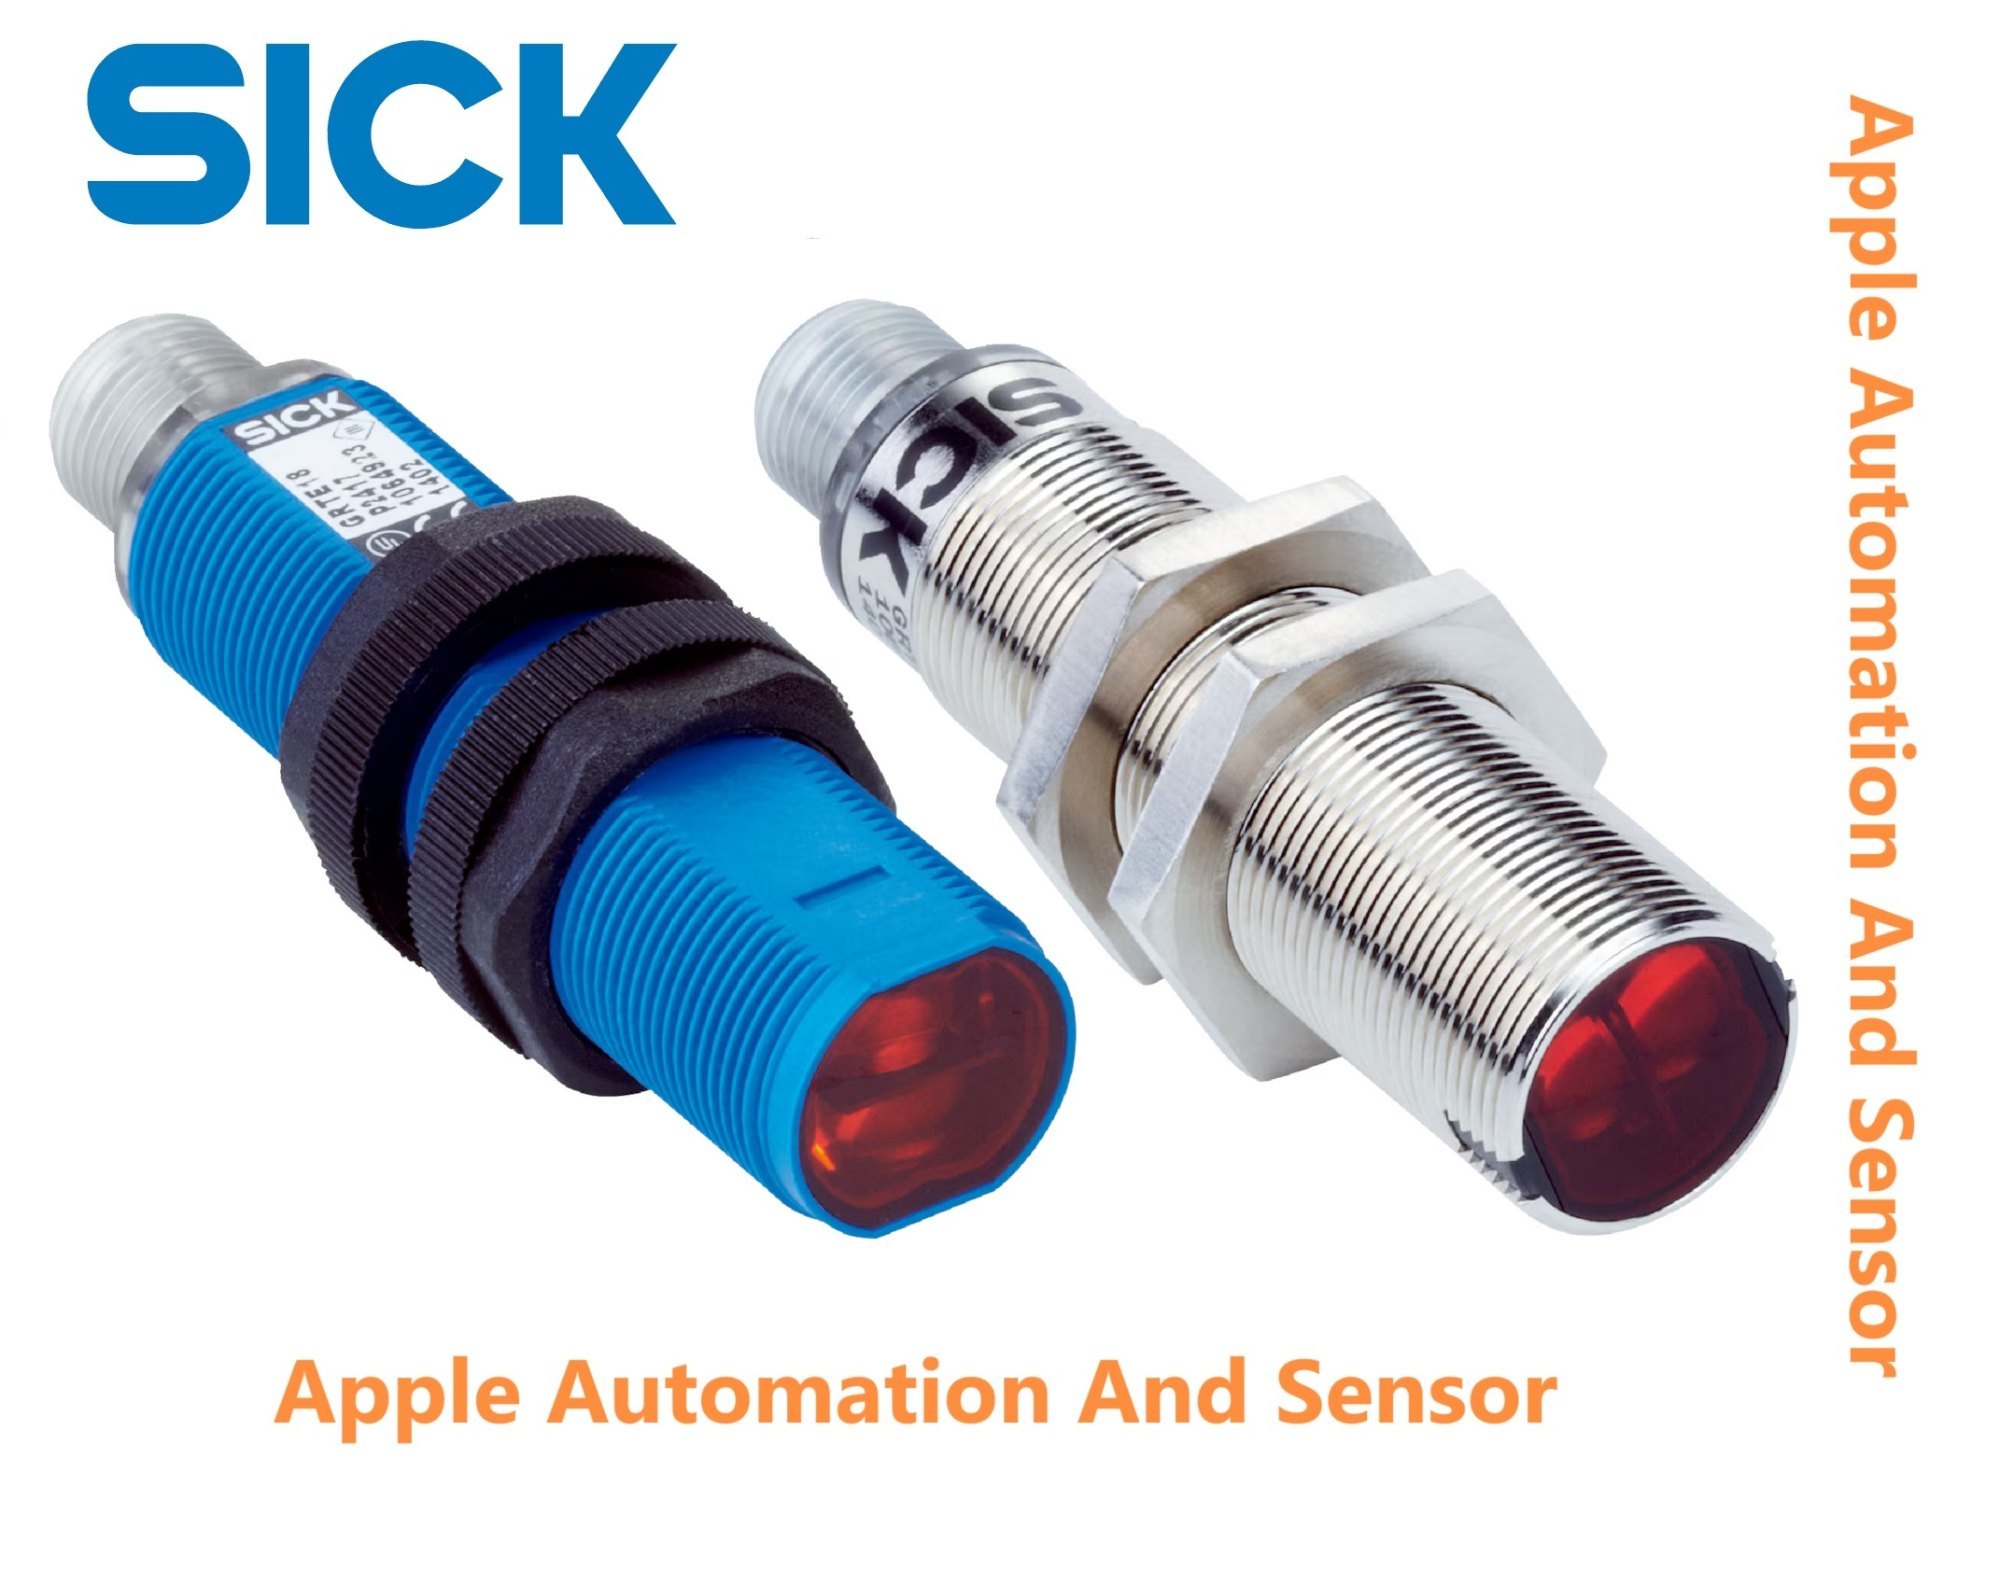 Sick Sensor Supplier